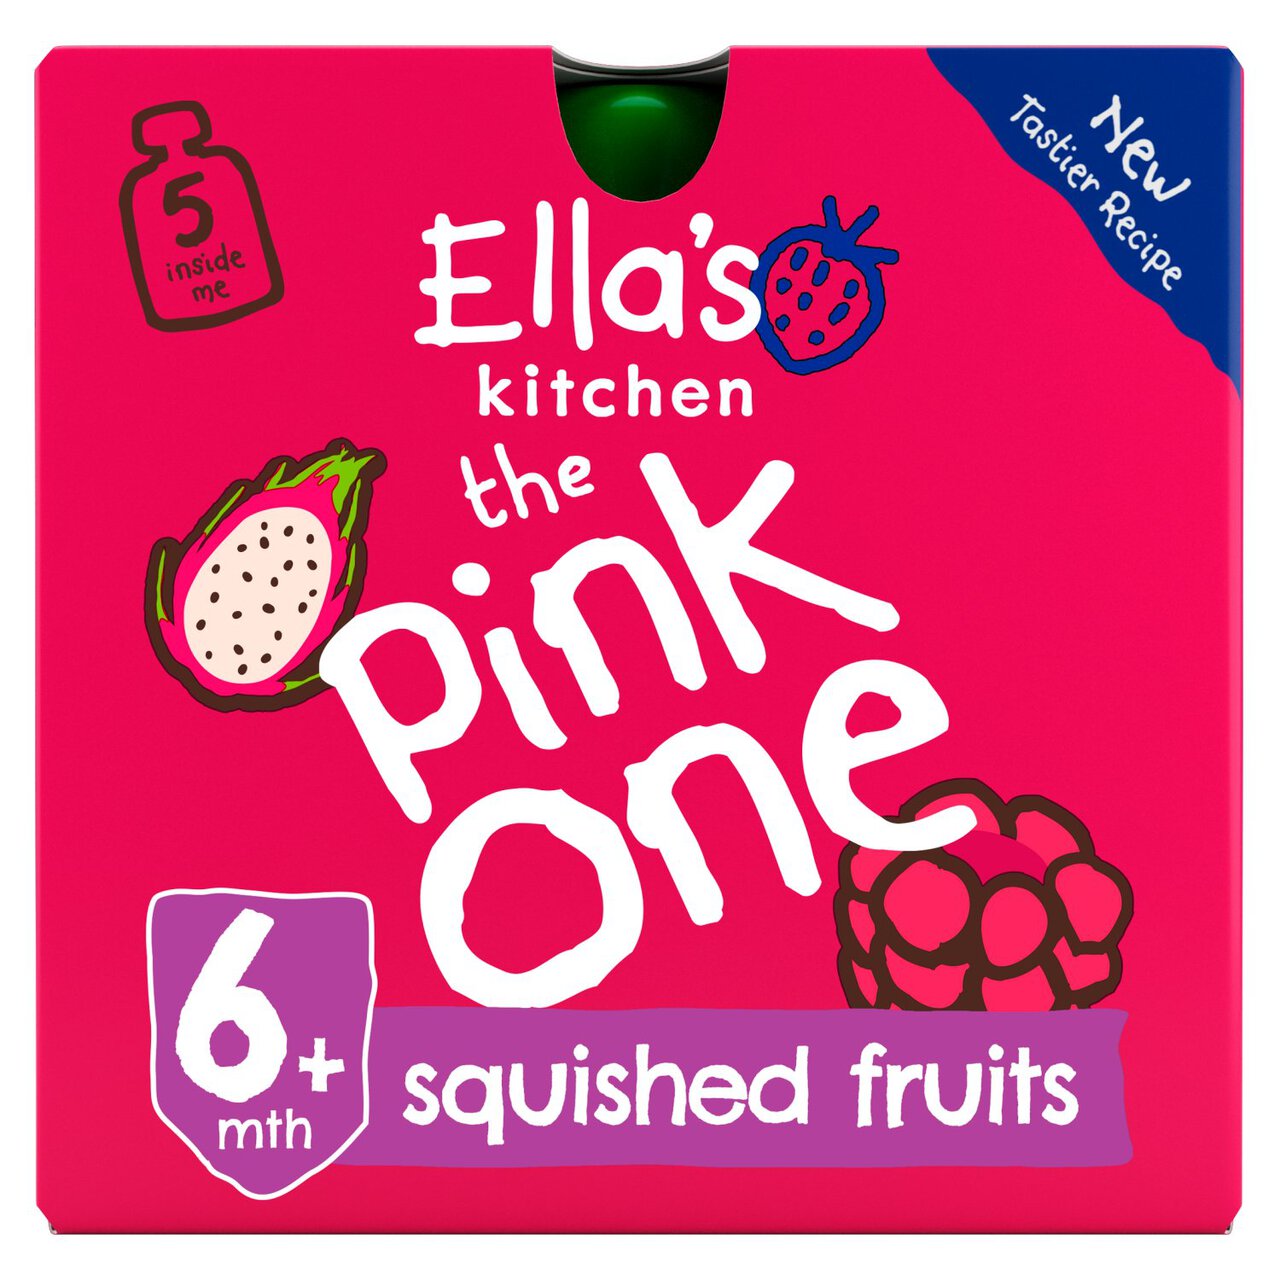 Ella's Kitchen The Pink One Smoothie Baby Food Pouch 6+ Months 5 x 90g